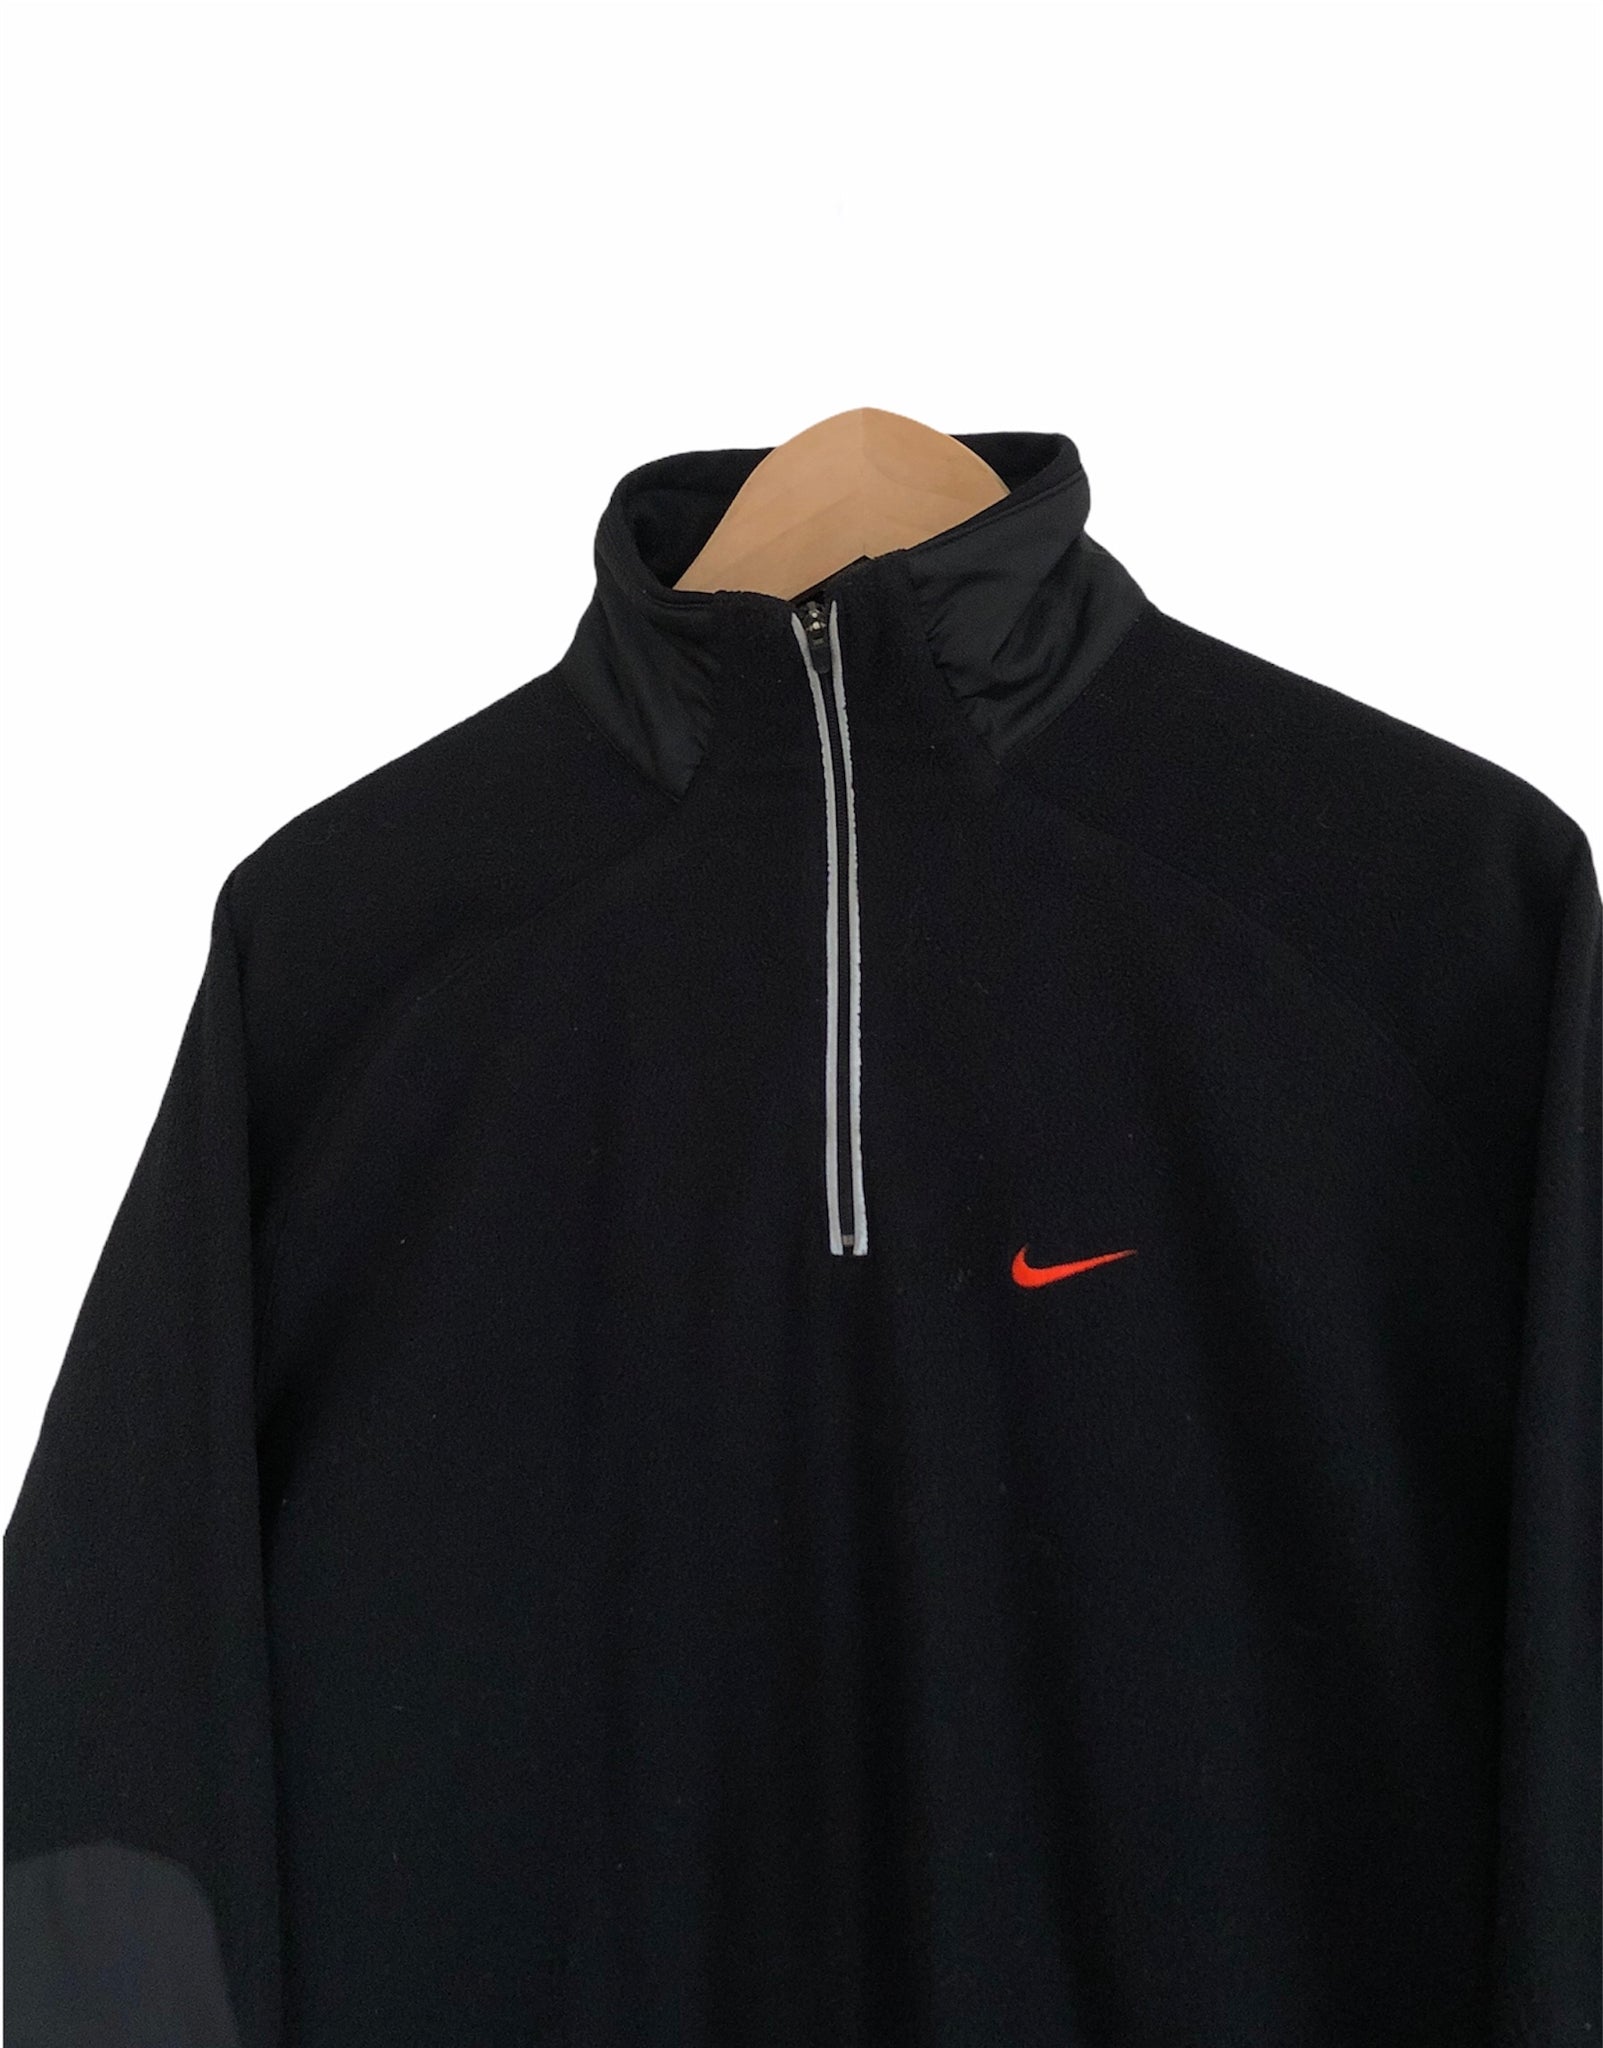 Vintage Nike Quarter Zip Sweatshirt / 1-4 Zip Fleece Black & Orange Sw ROUTE CLOTHING